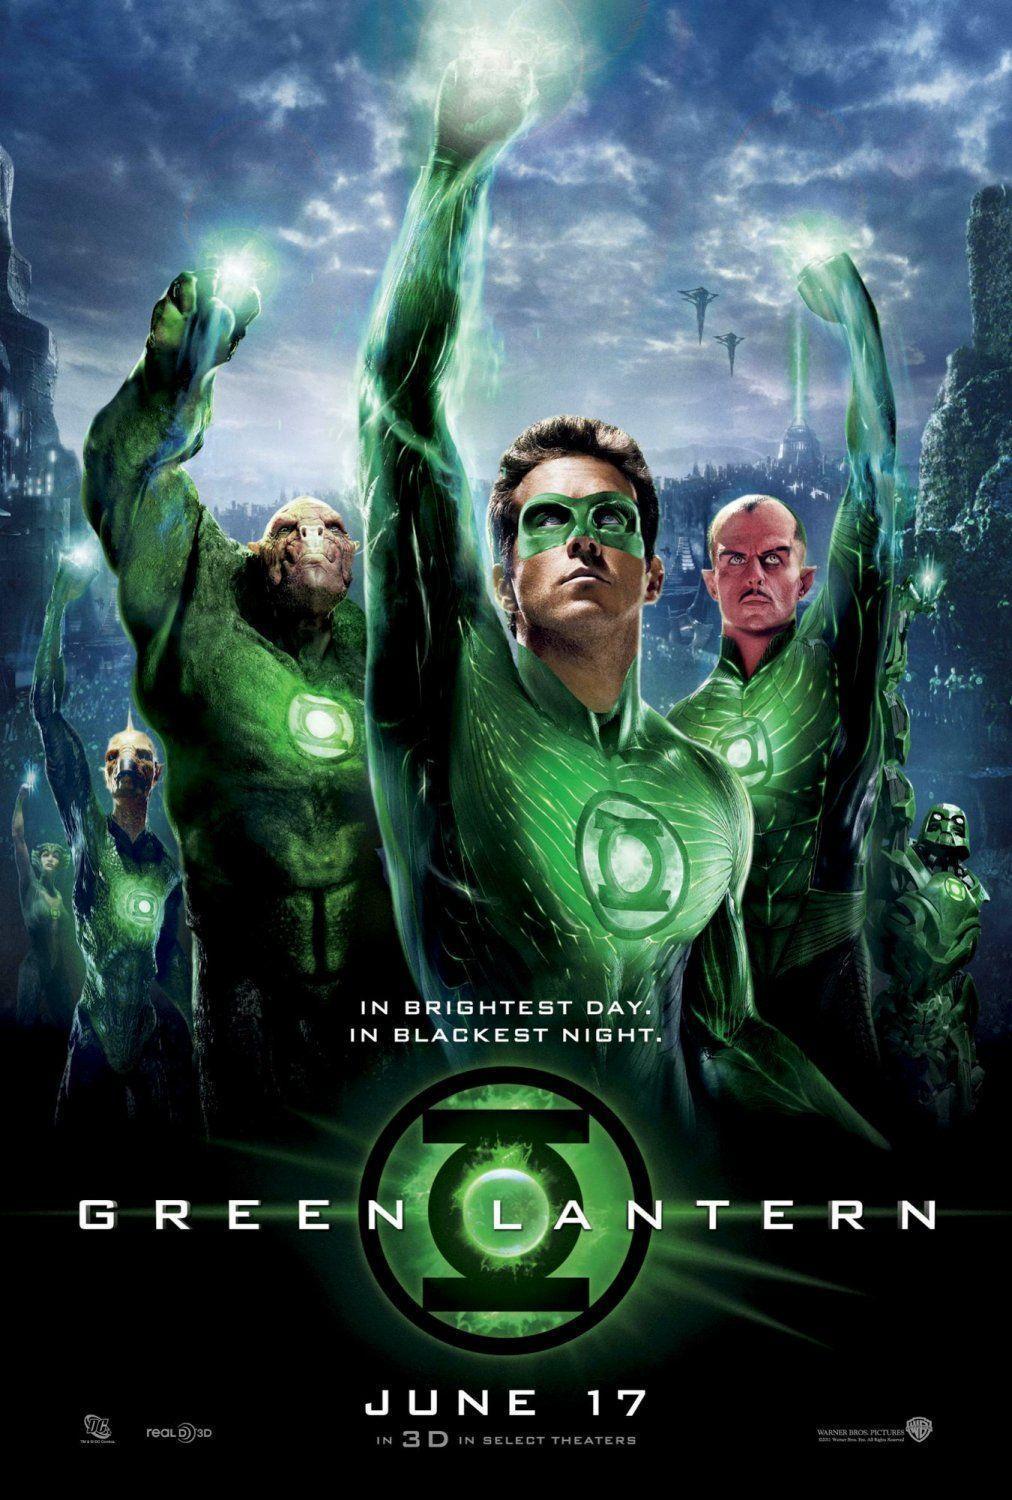 Green Lantern Movie wallpaper high resolution. High quality